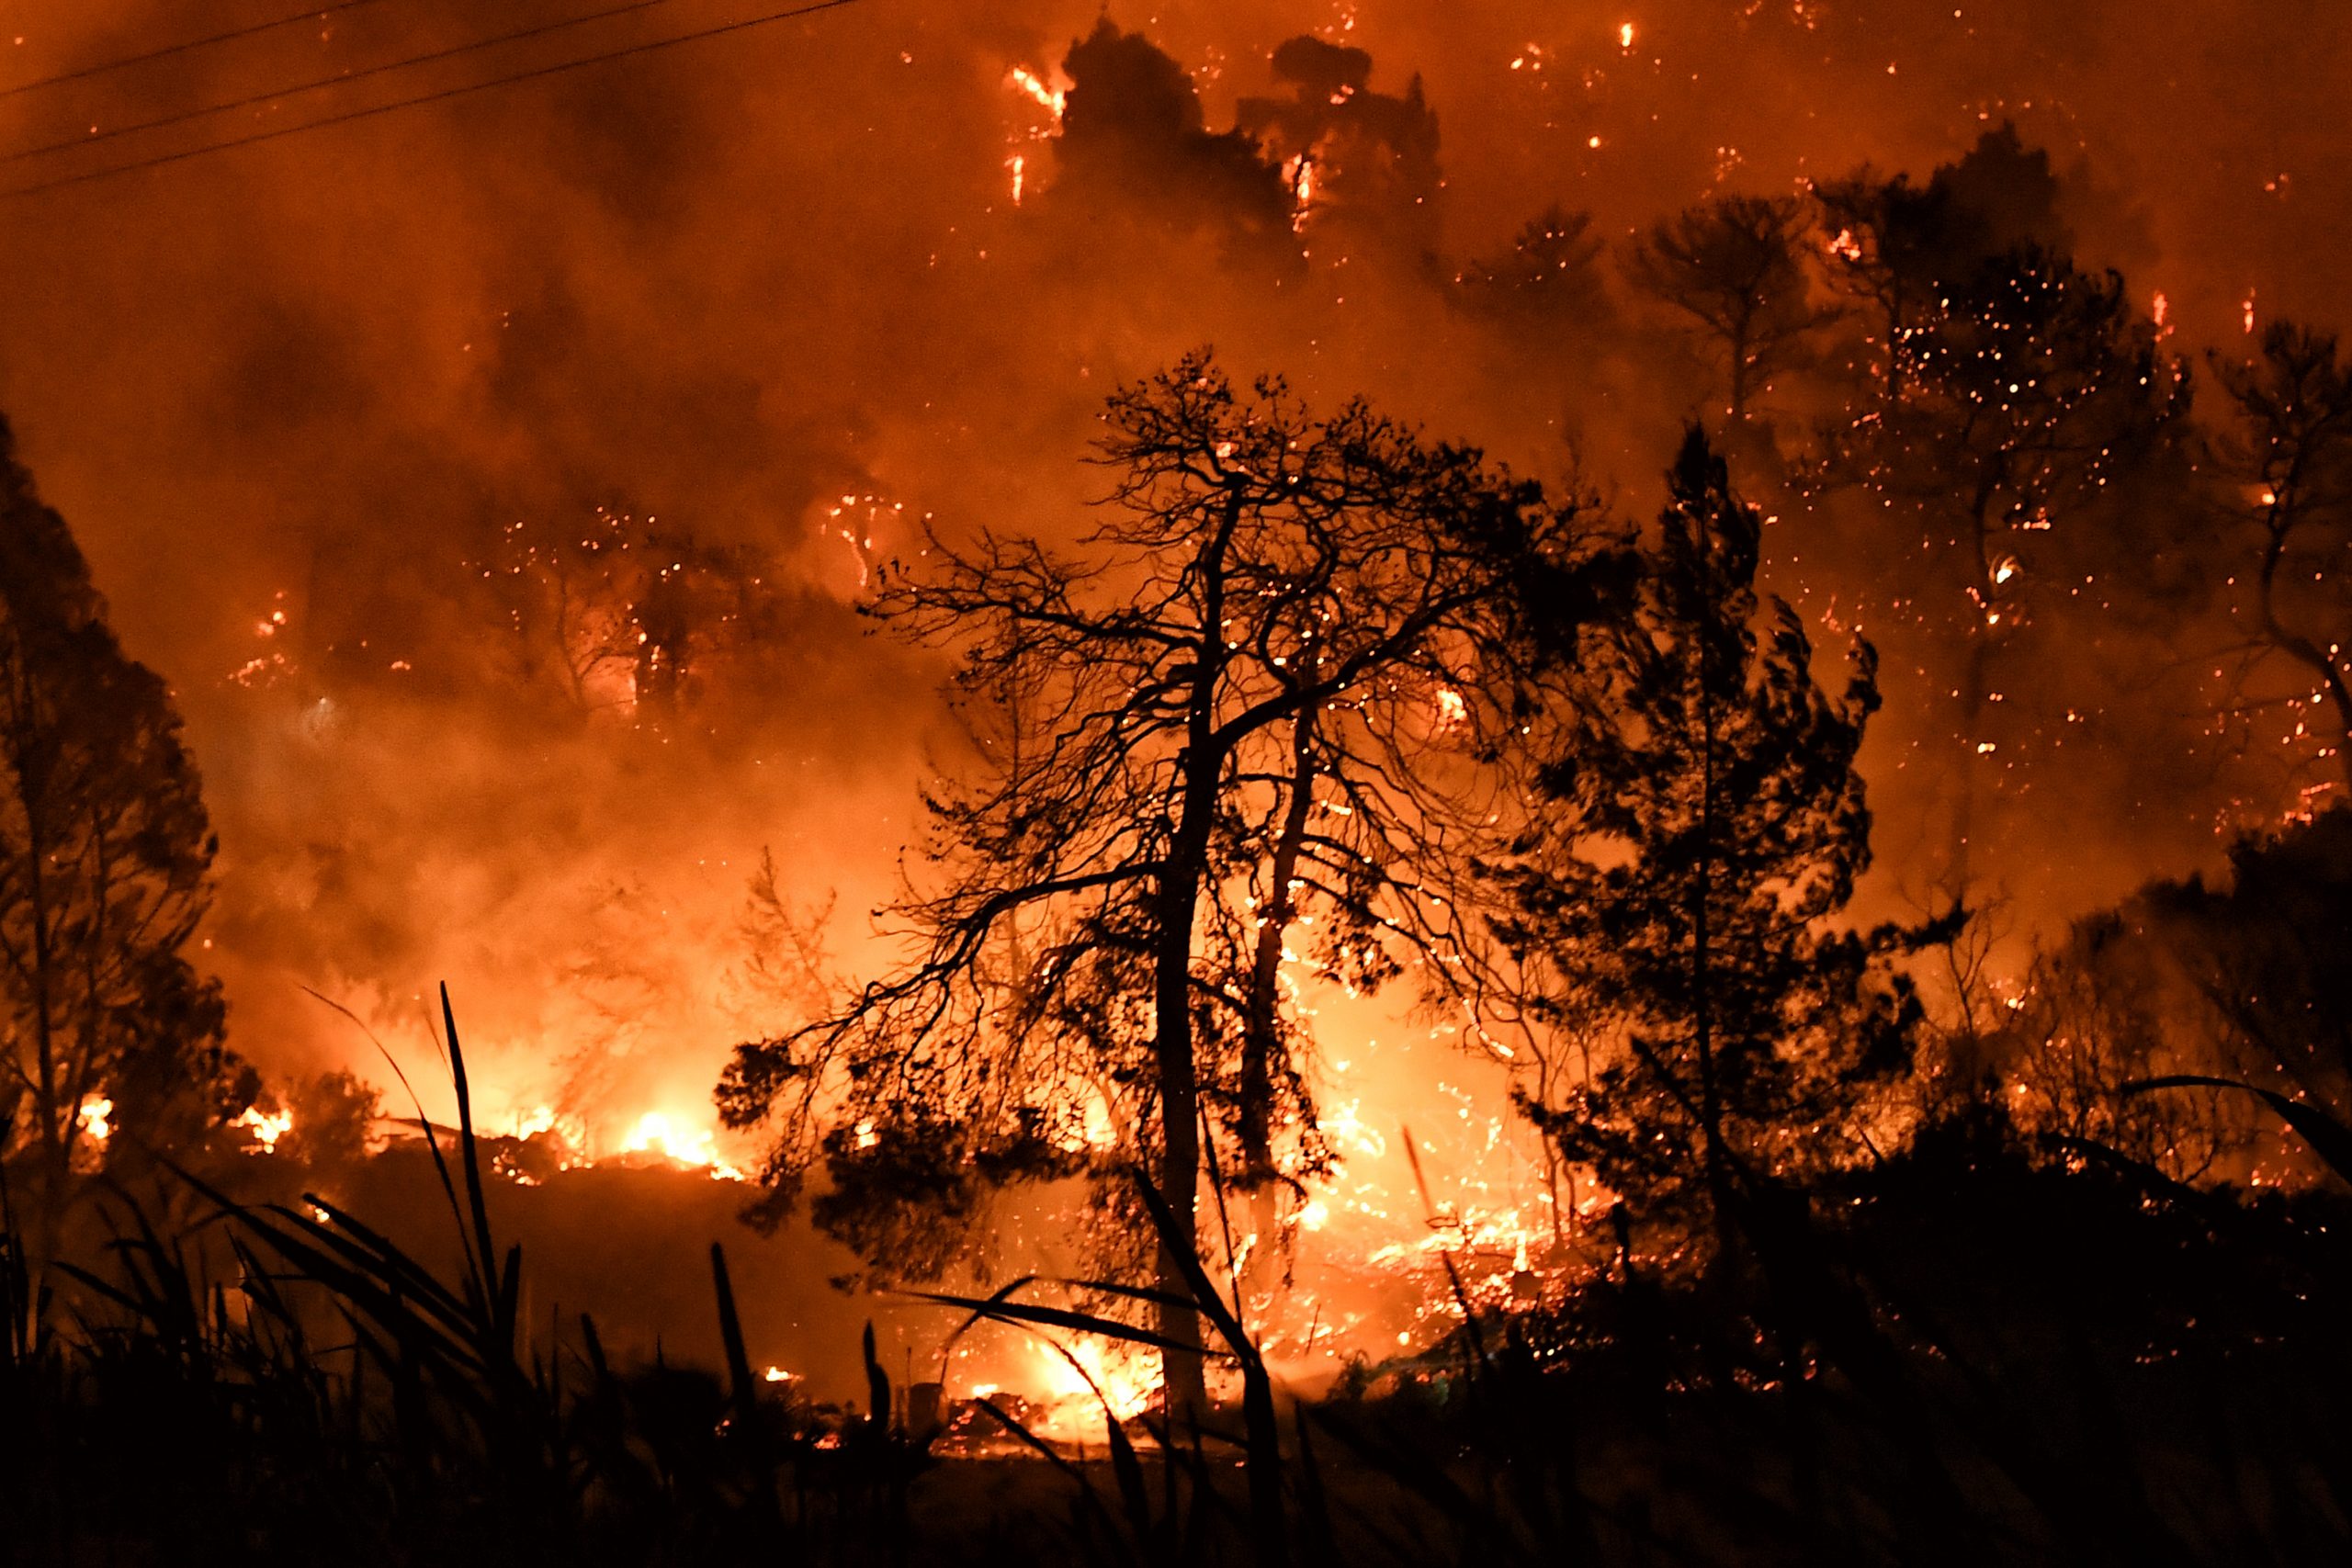 Meteo για φωτιές: Πάνω από 1.000.000 στρέμματα οι καμένες εκτάσεις στην Ελλάδα!